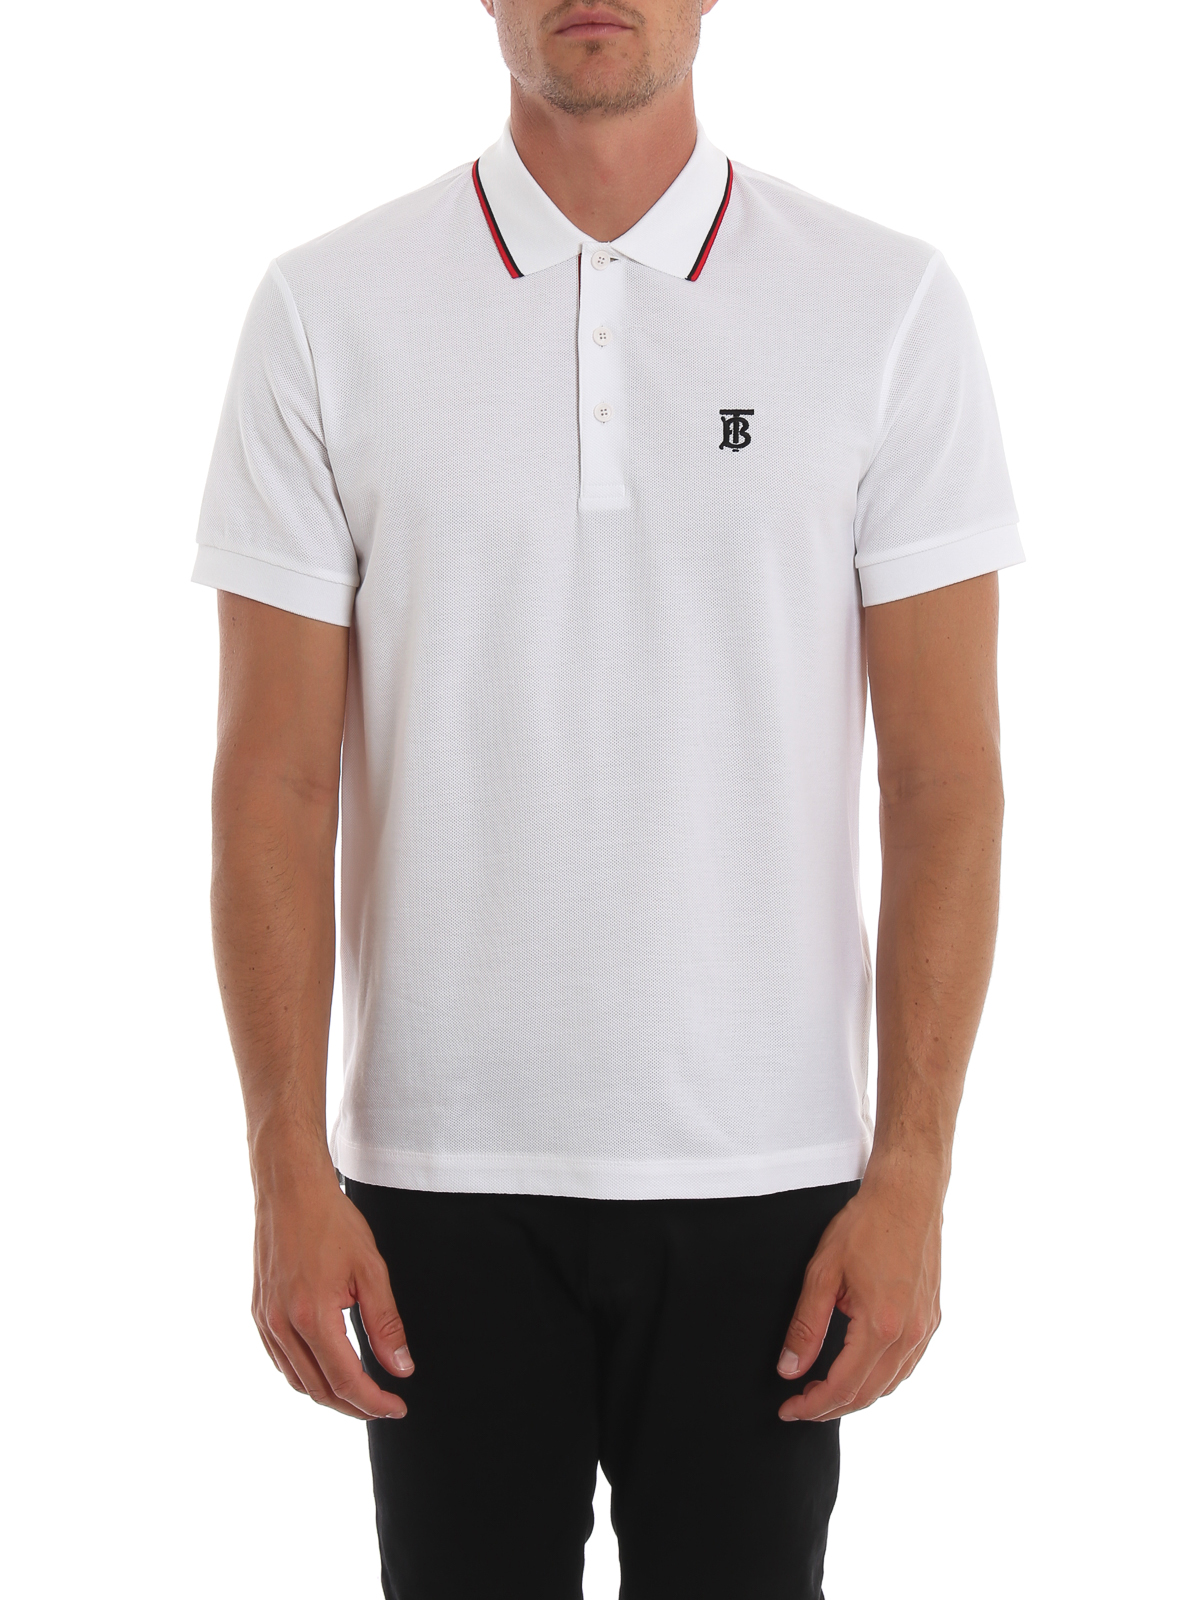 Polo shirts Burberry - Walton polo shirt - 8017004 | Shop online at iKRIX